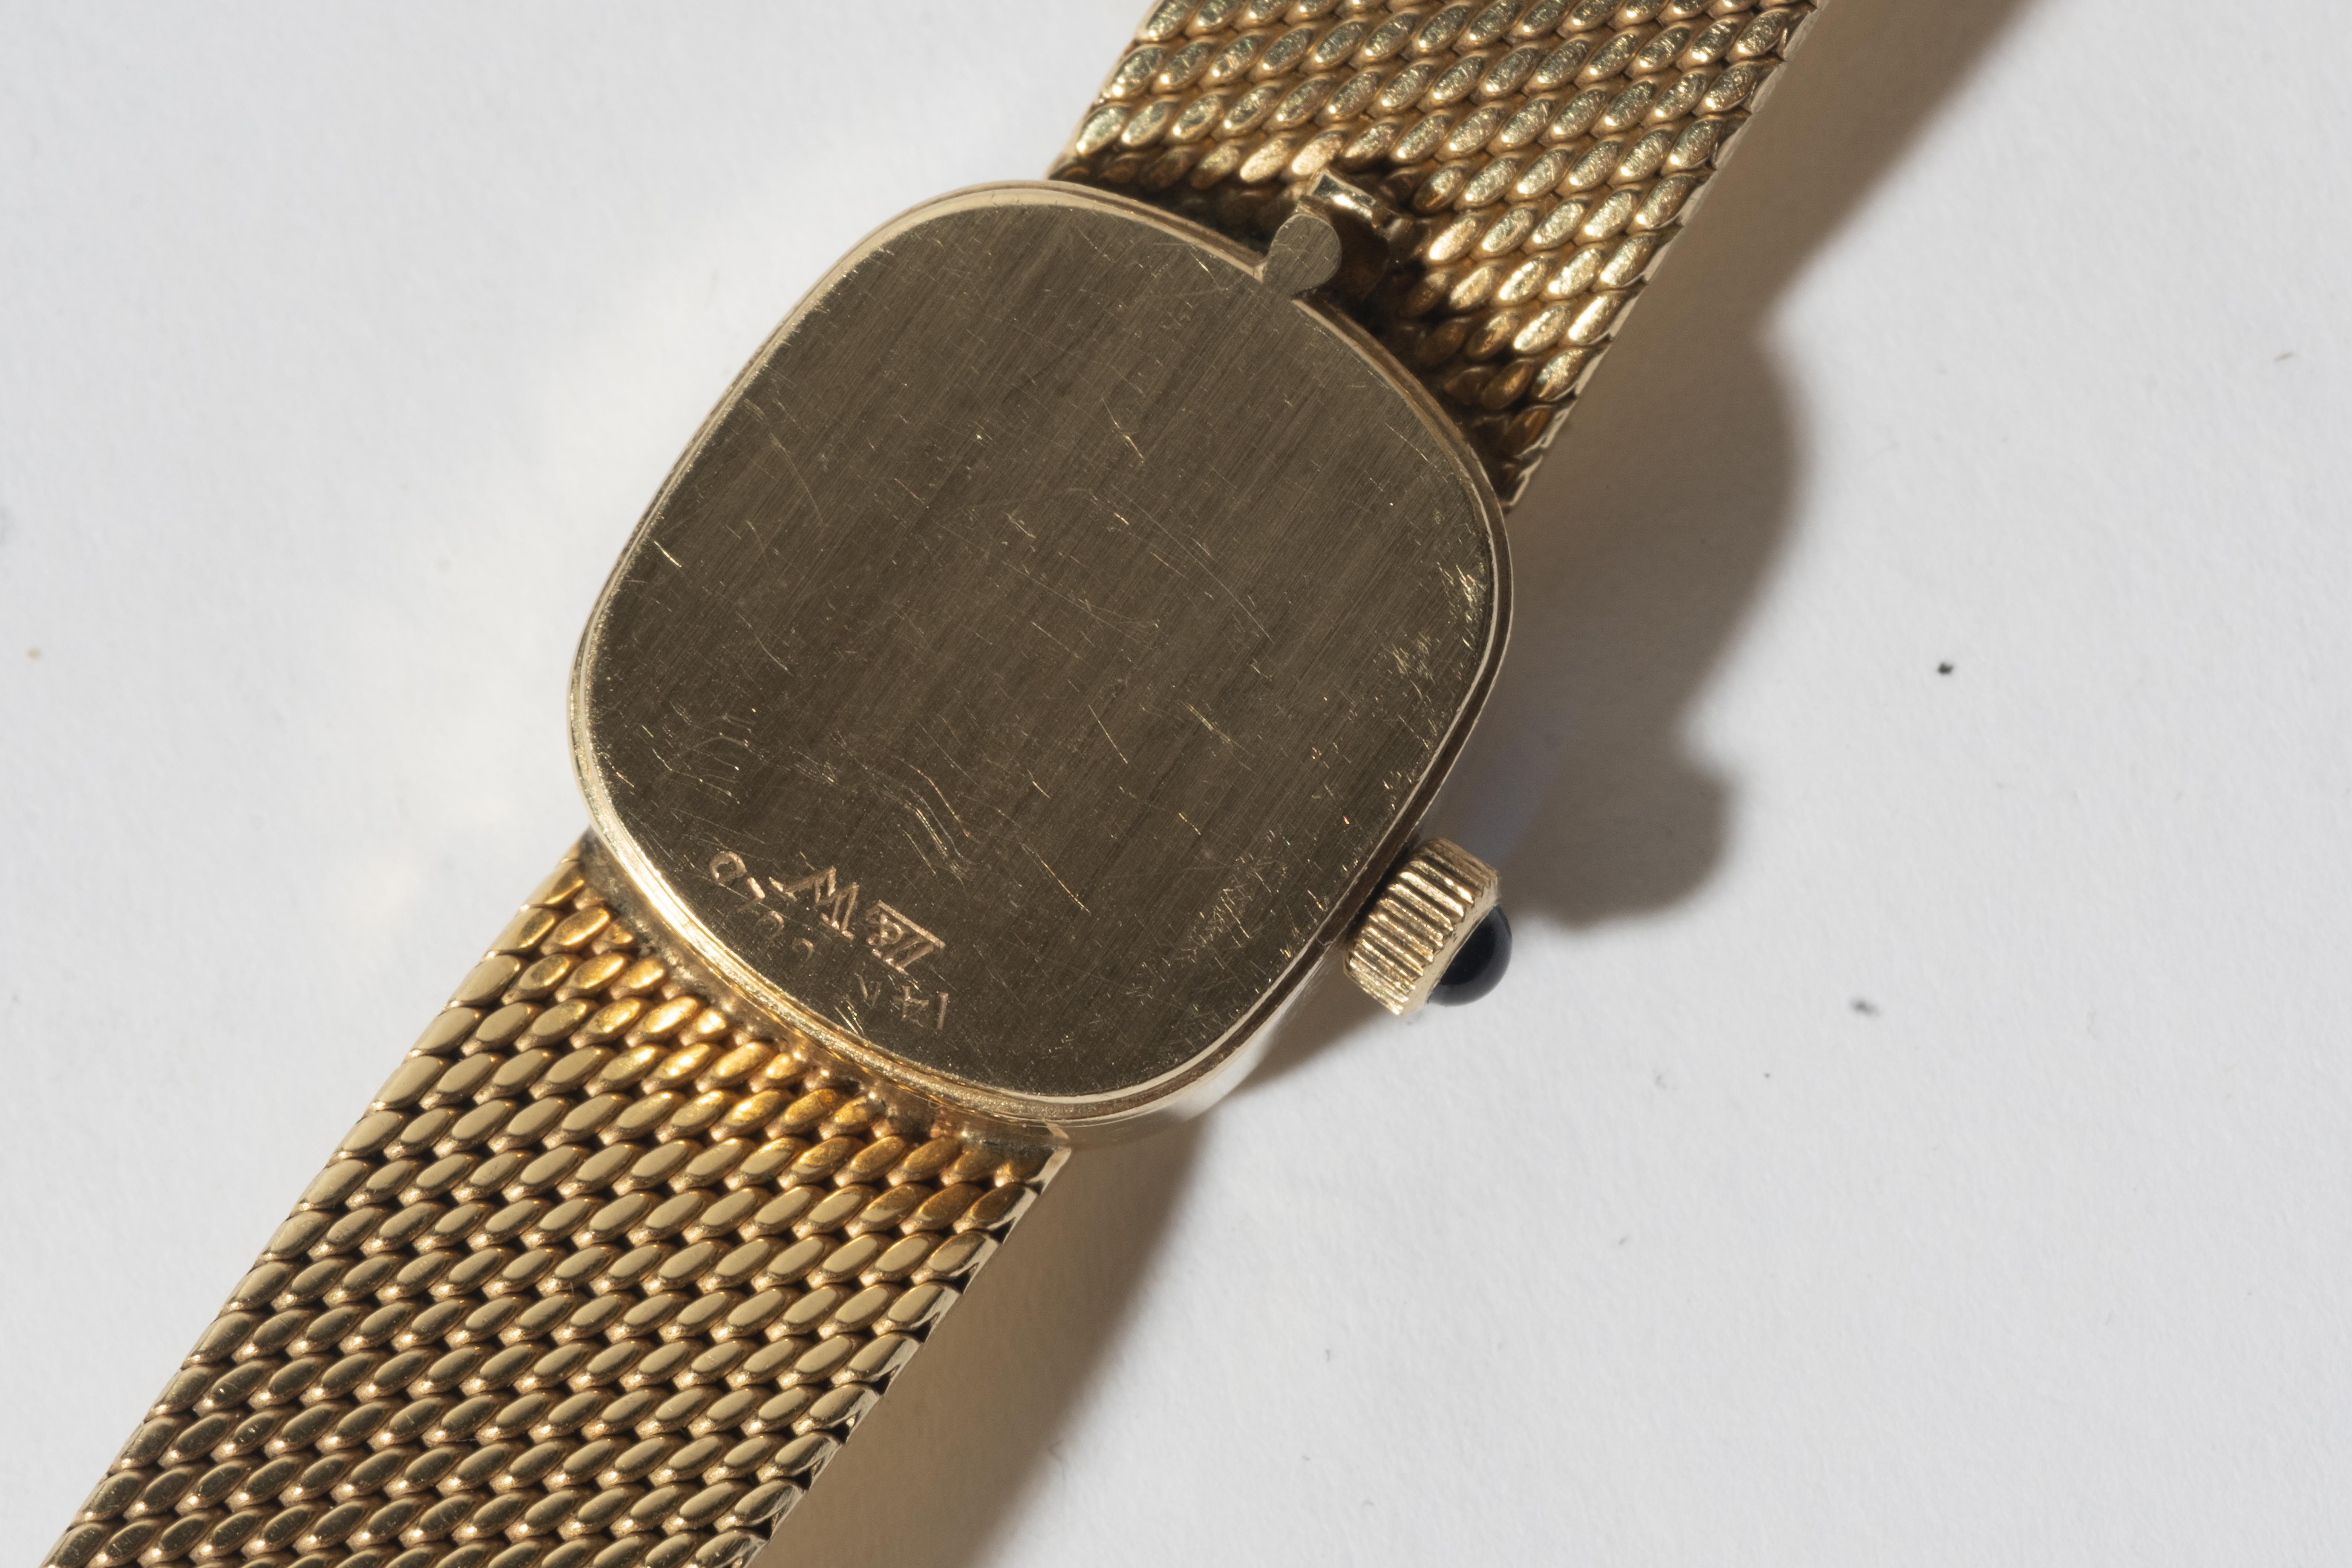 girard perregaux vintage women's watch